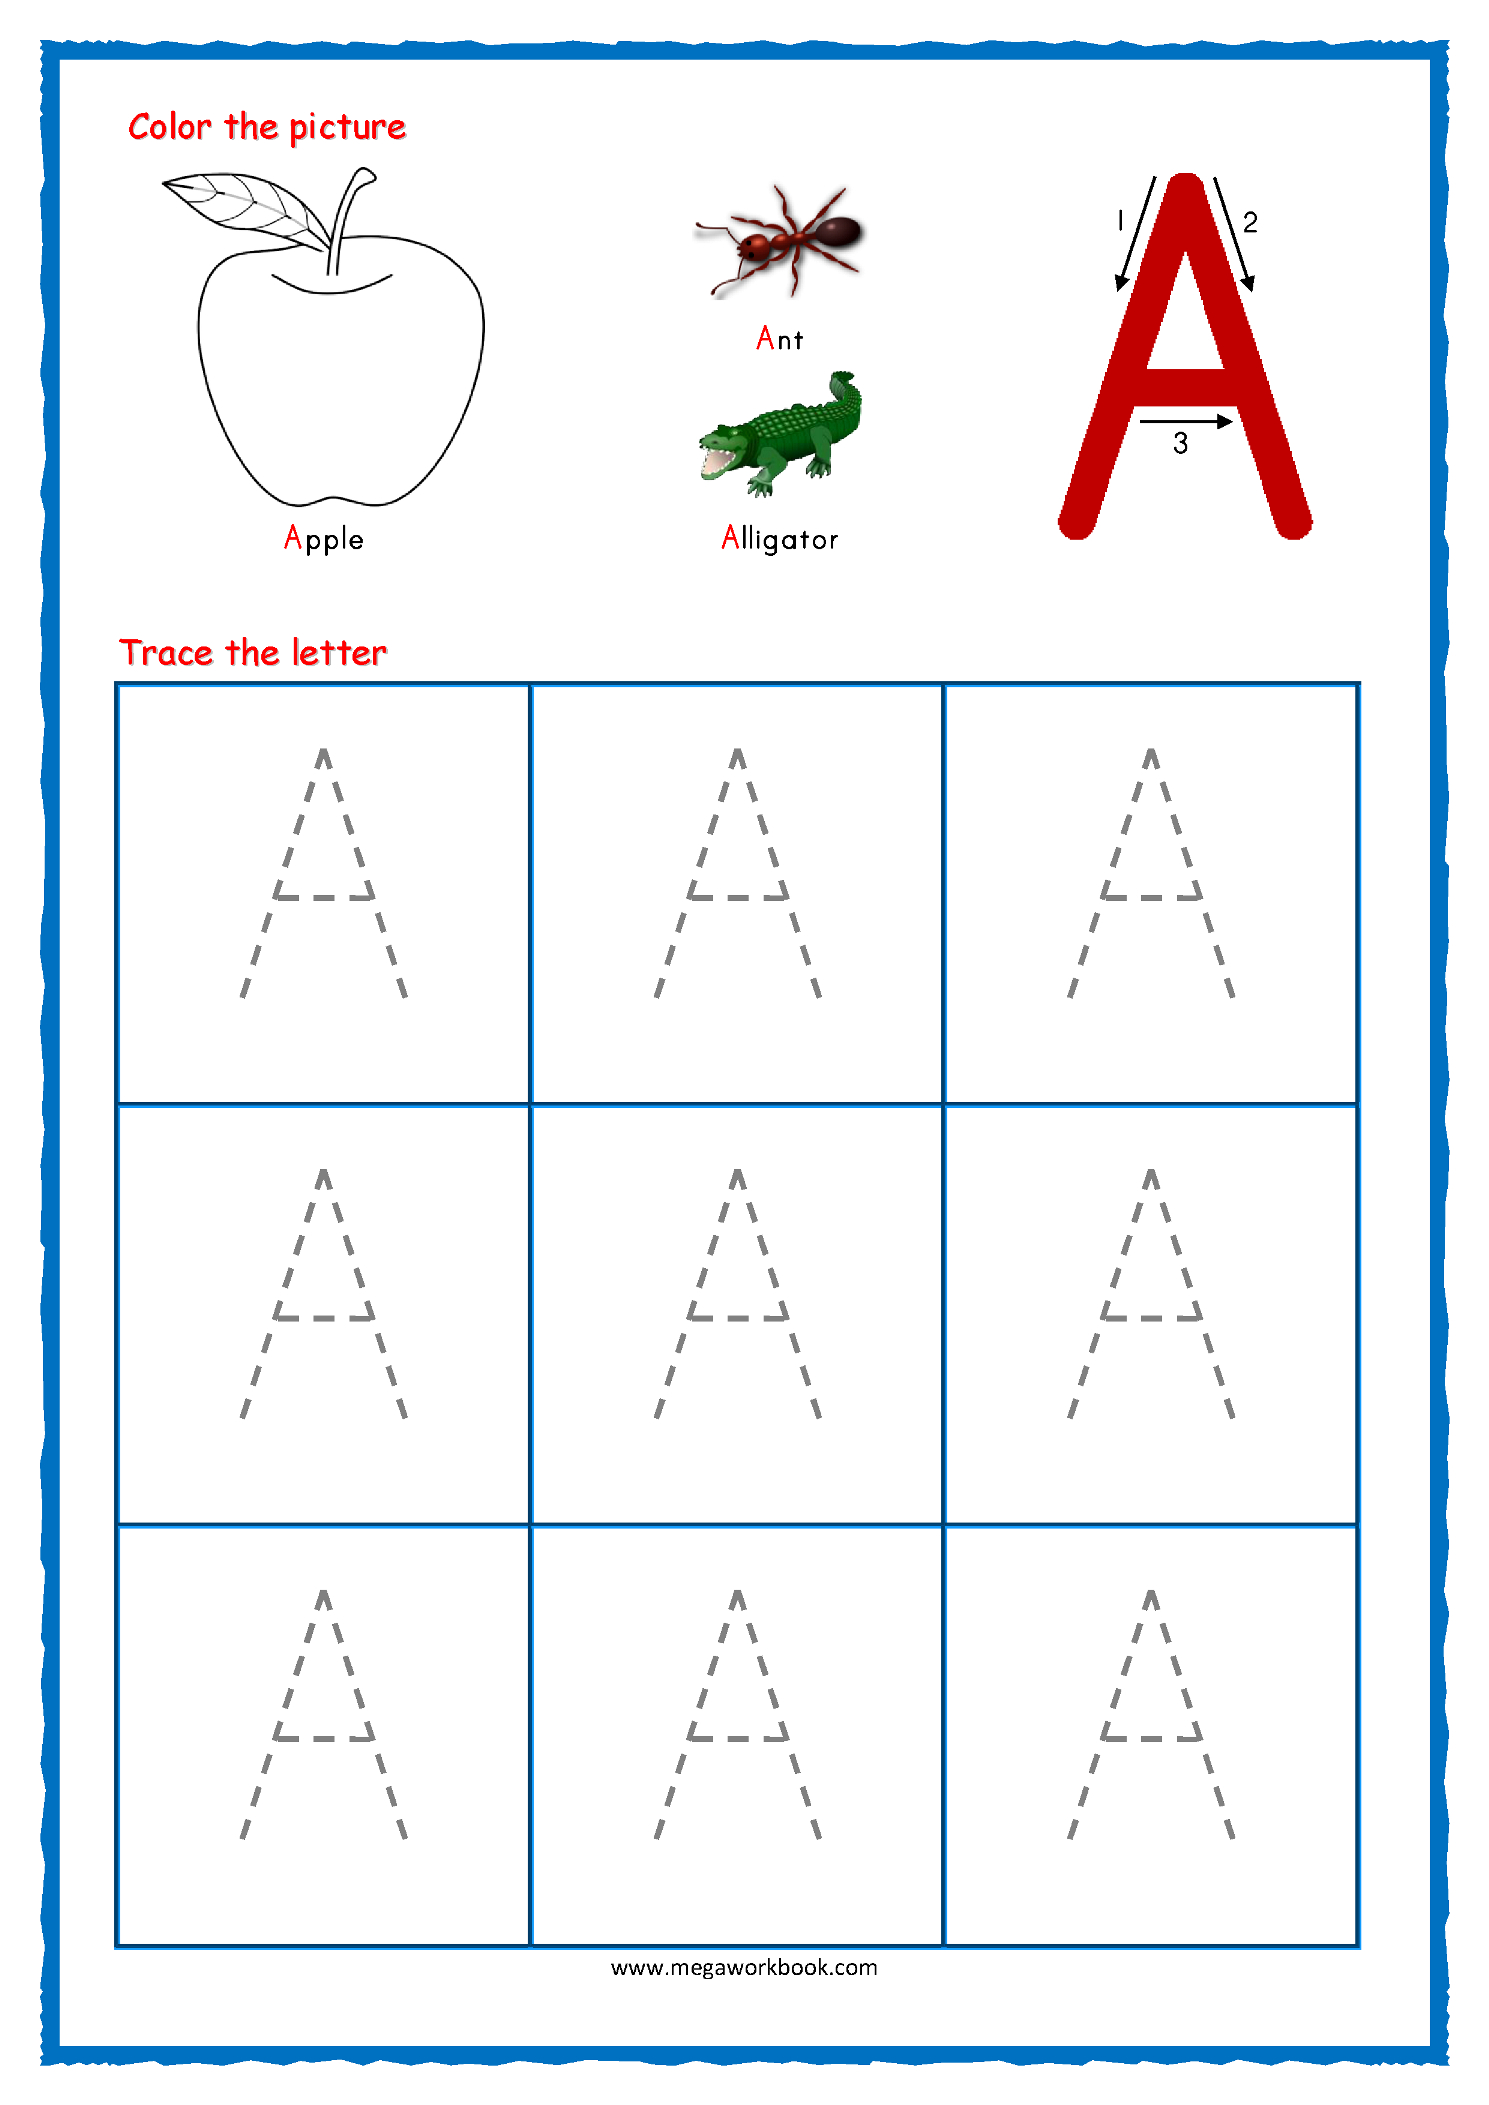 tracing-letter-printable-worksheets